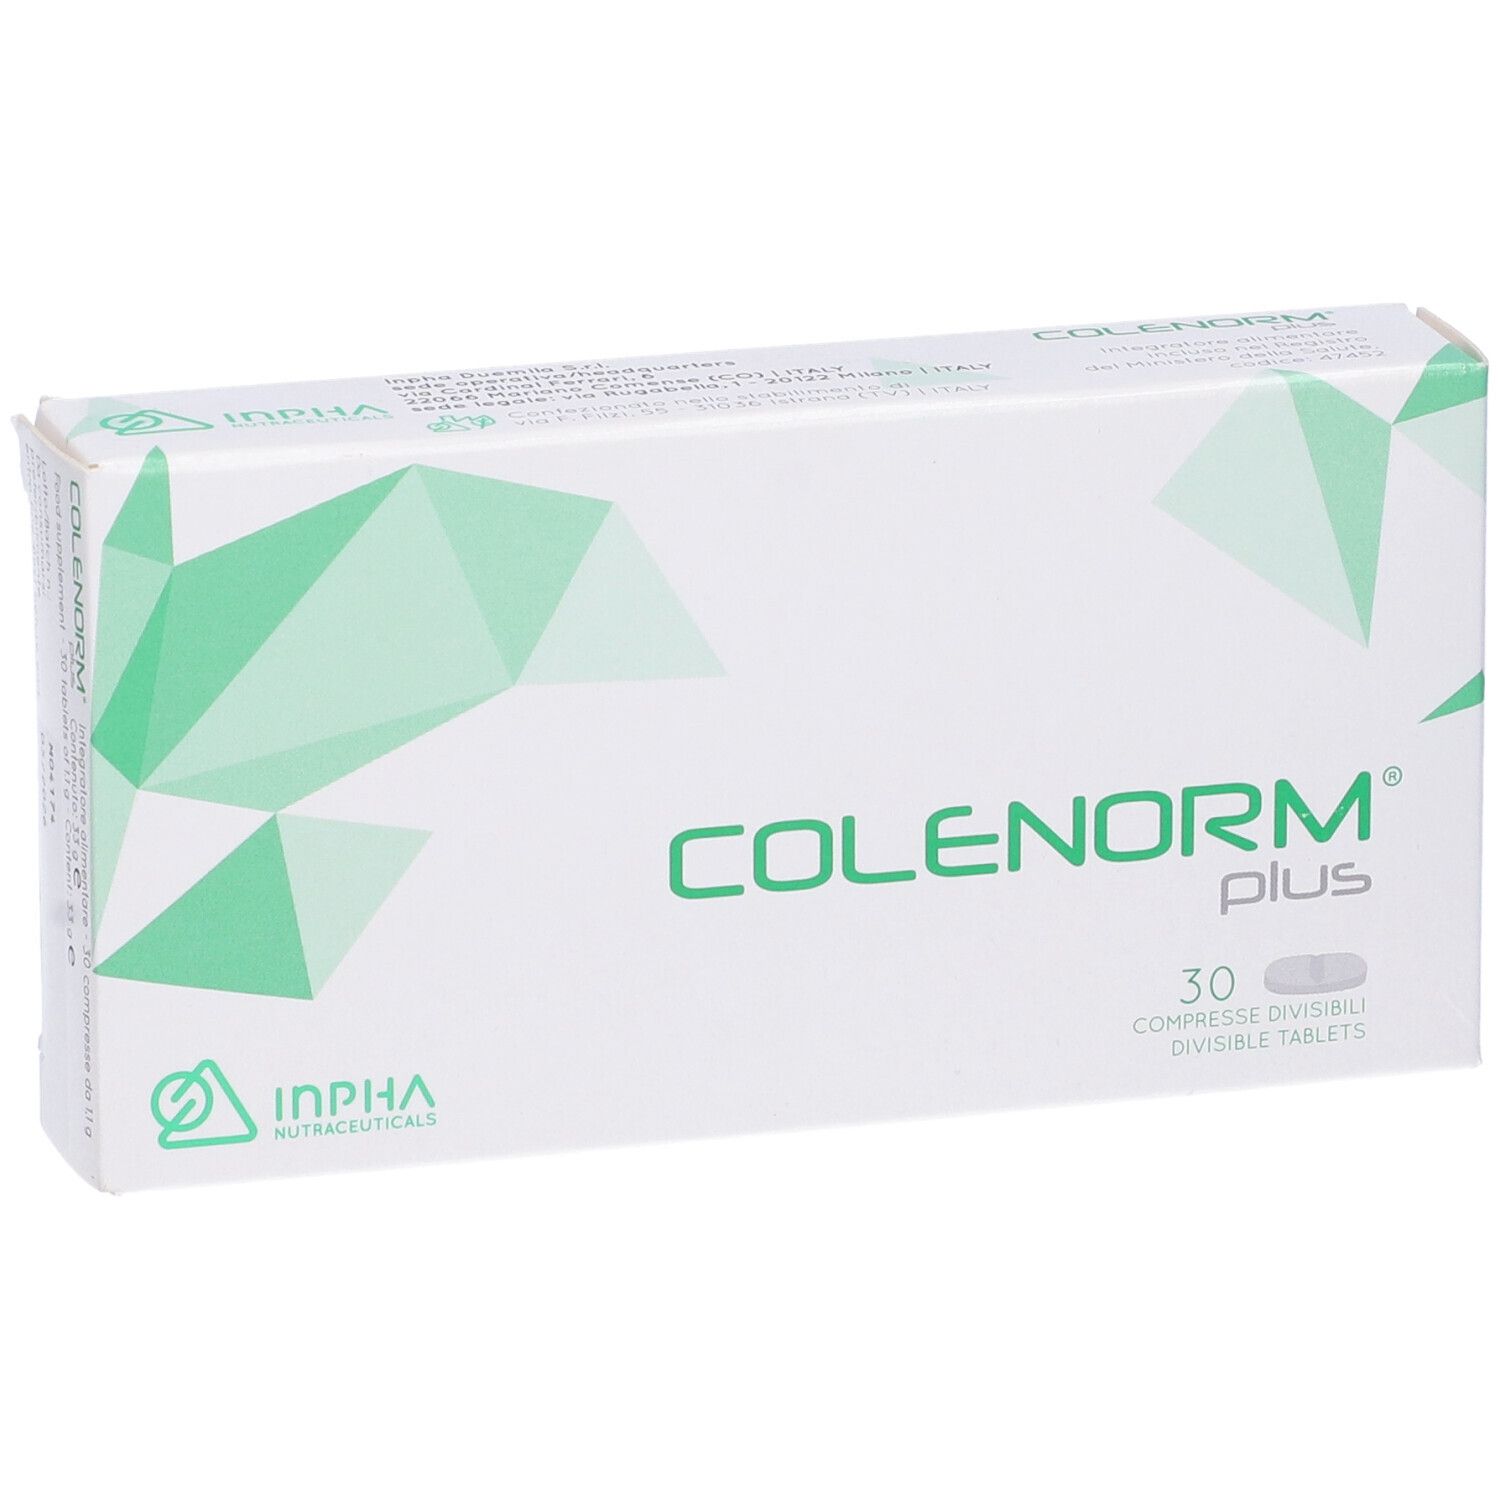 Colenorm® Plus Compresse